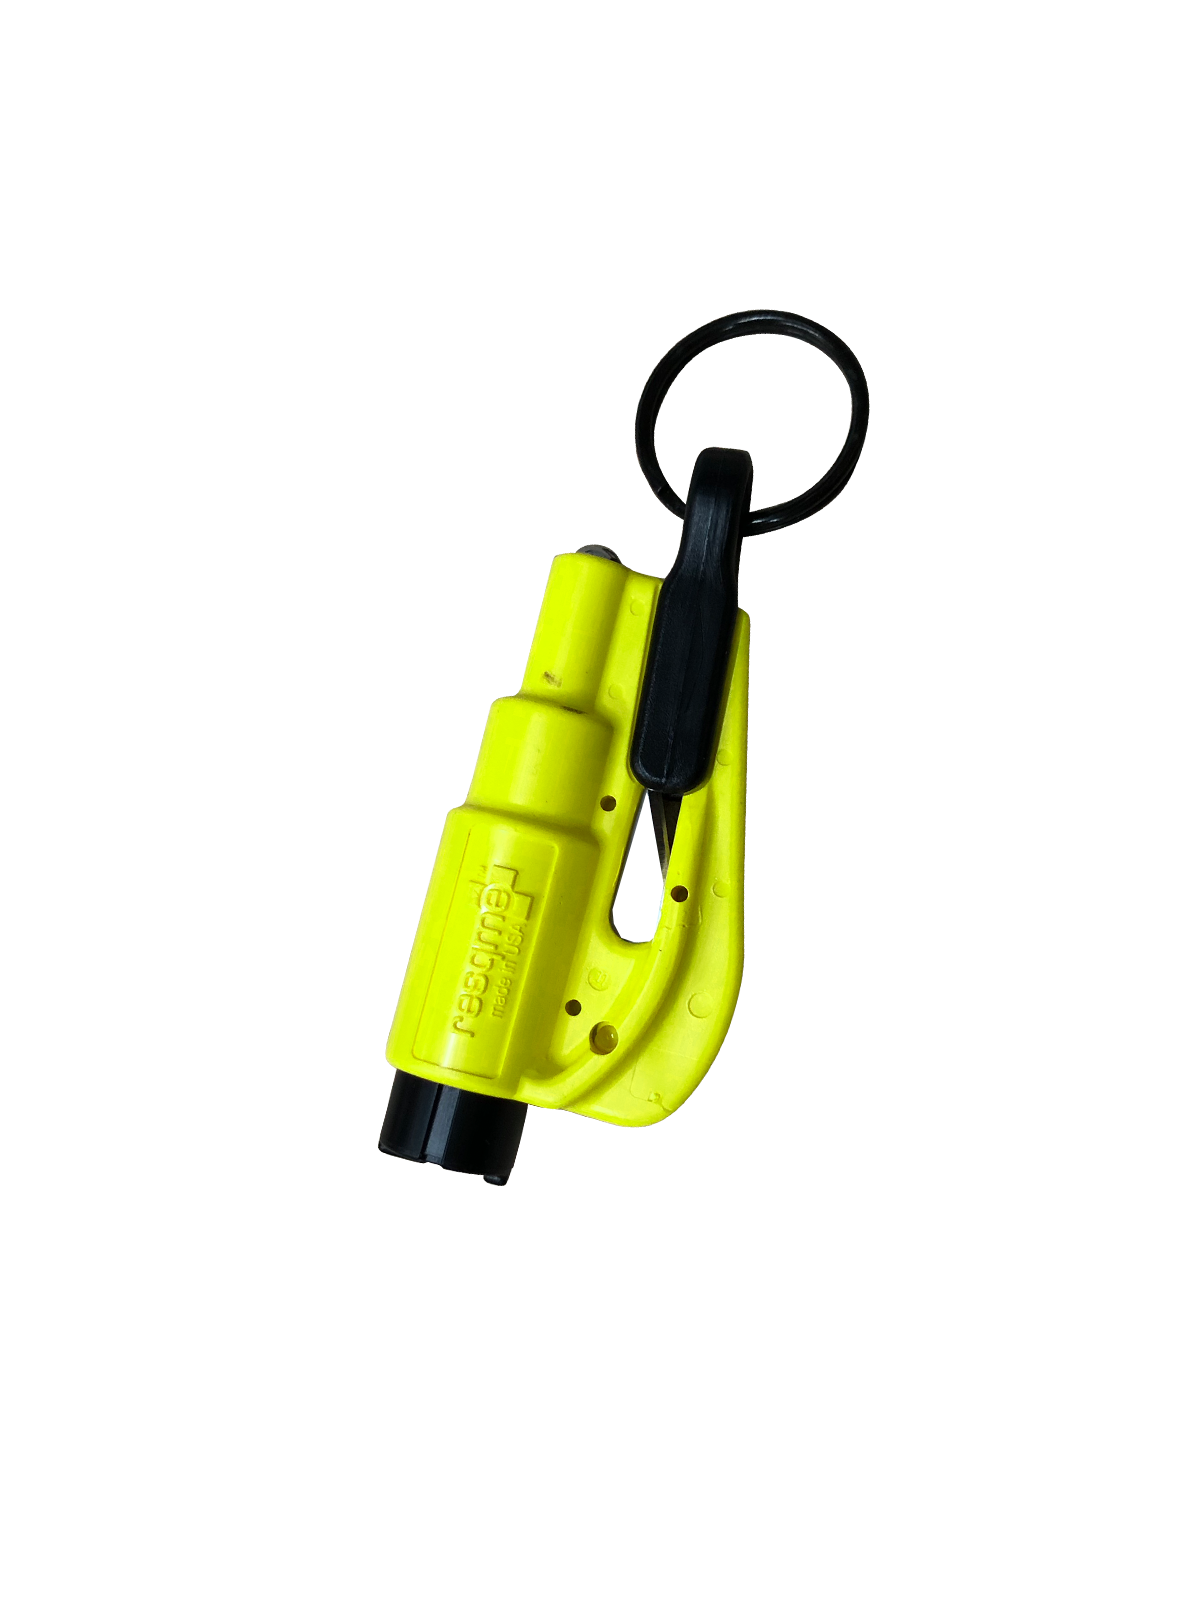  resqme The Original Emergency Keychain Car Escape Tool